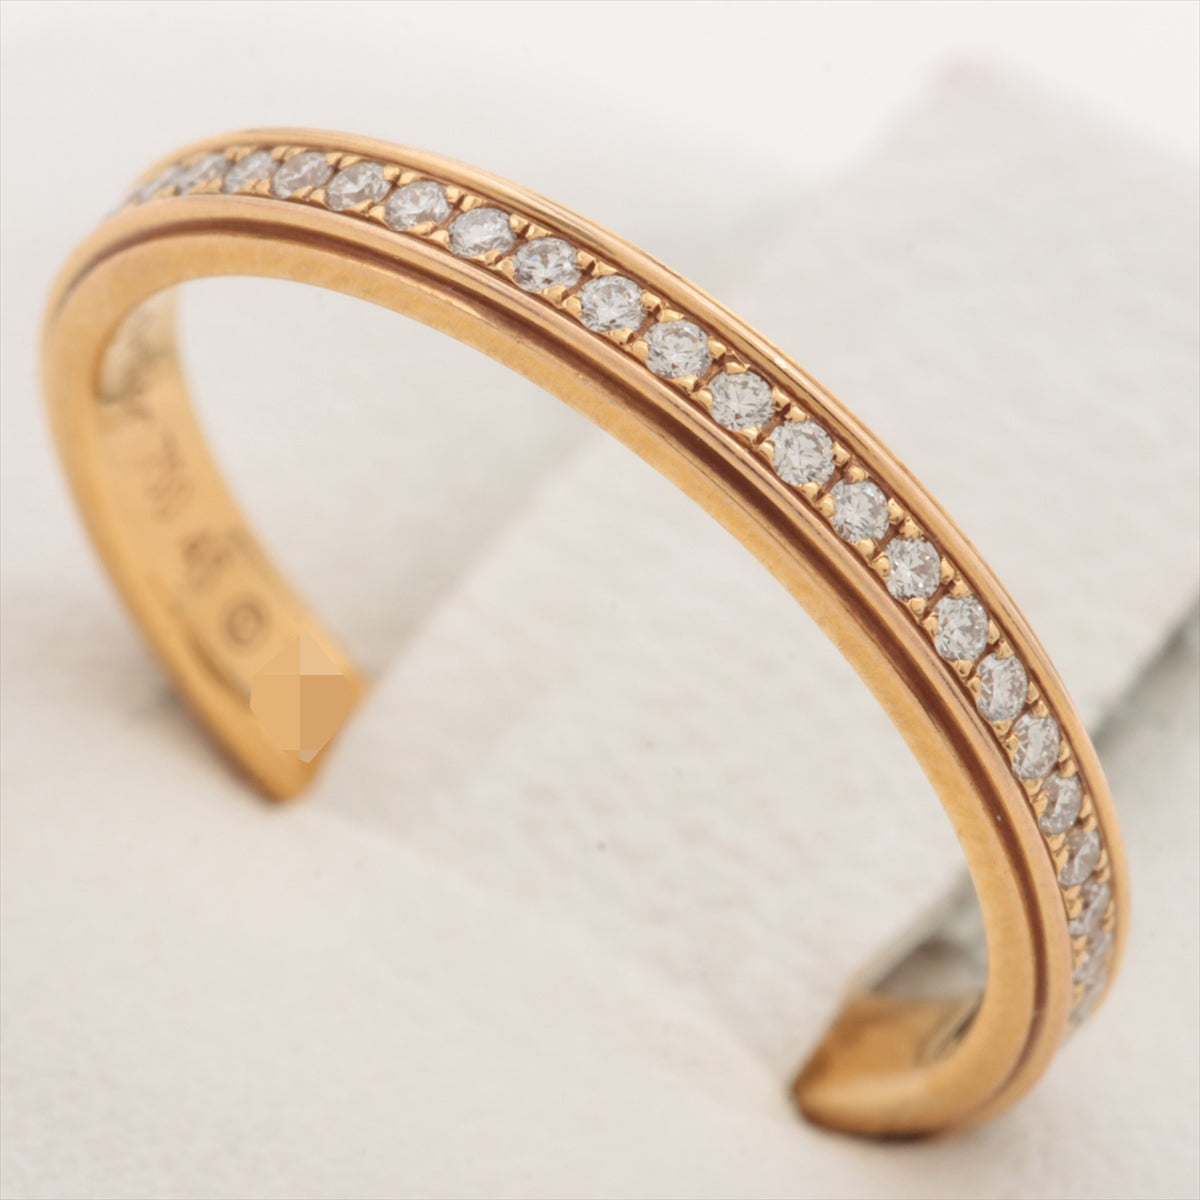 Cartier Damenuhr wedding full diamond rings 750(PG) 1.4g 45